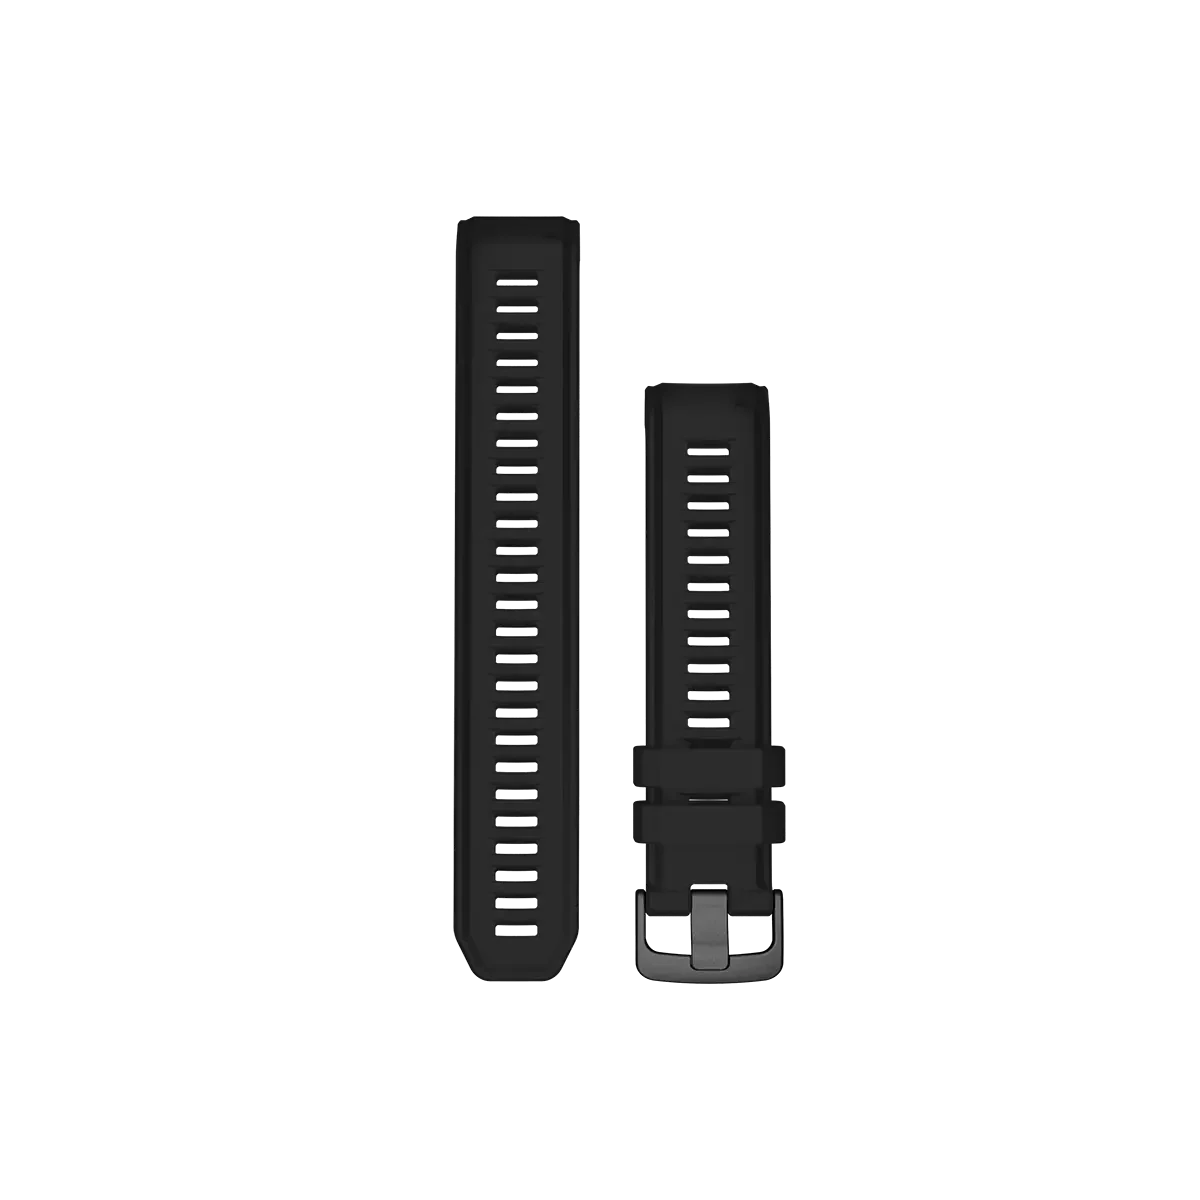 Garmin 22 mm Watch Band in black